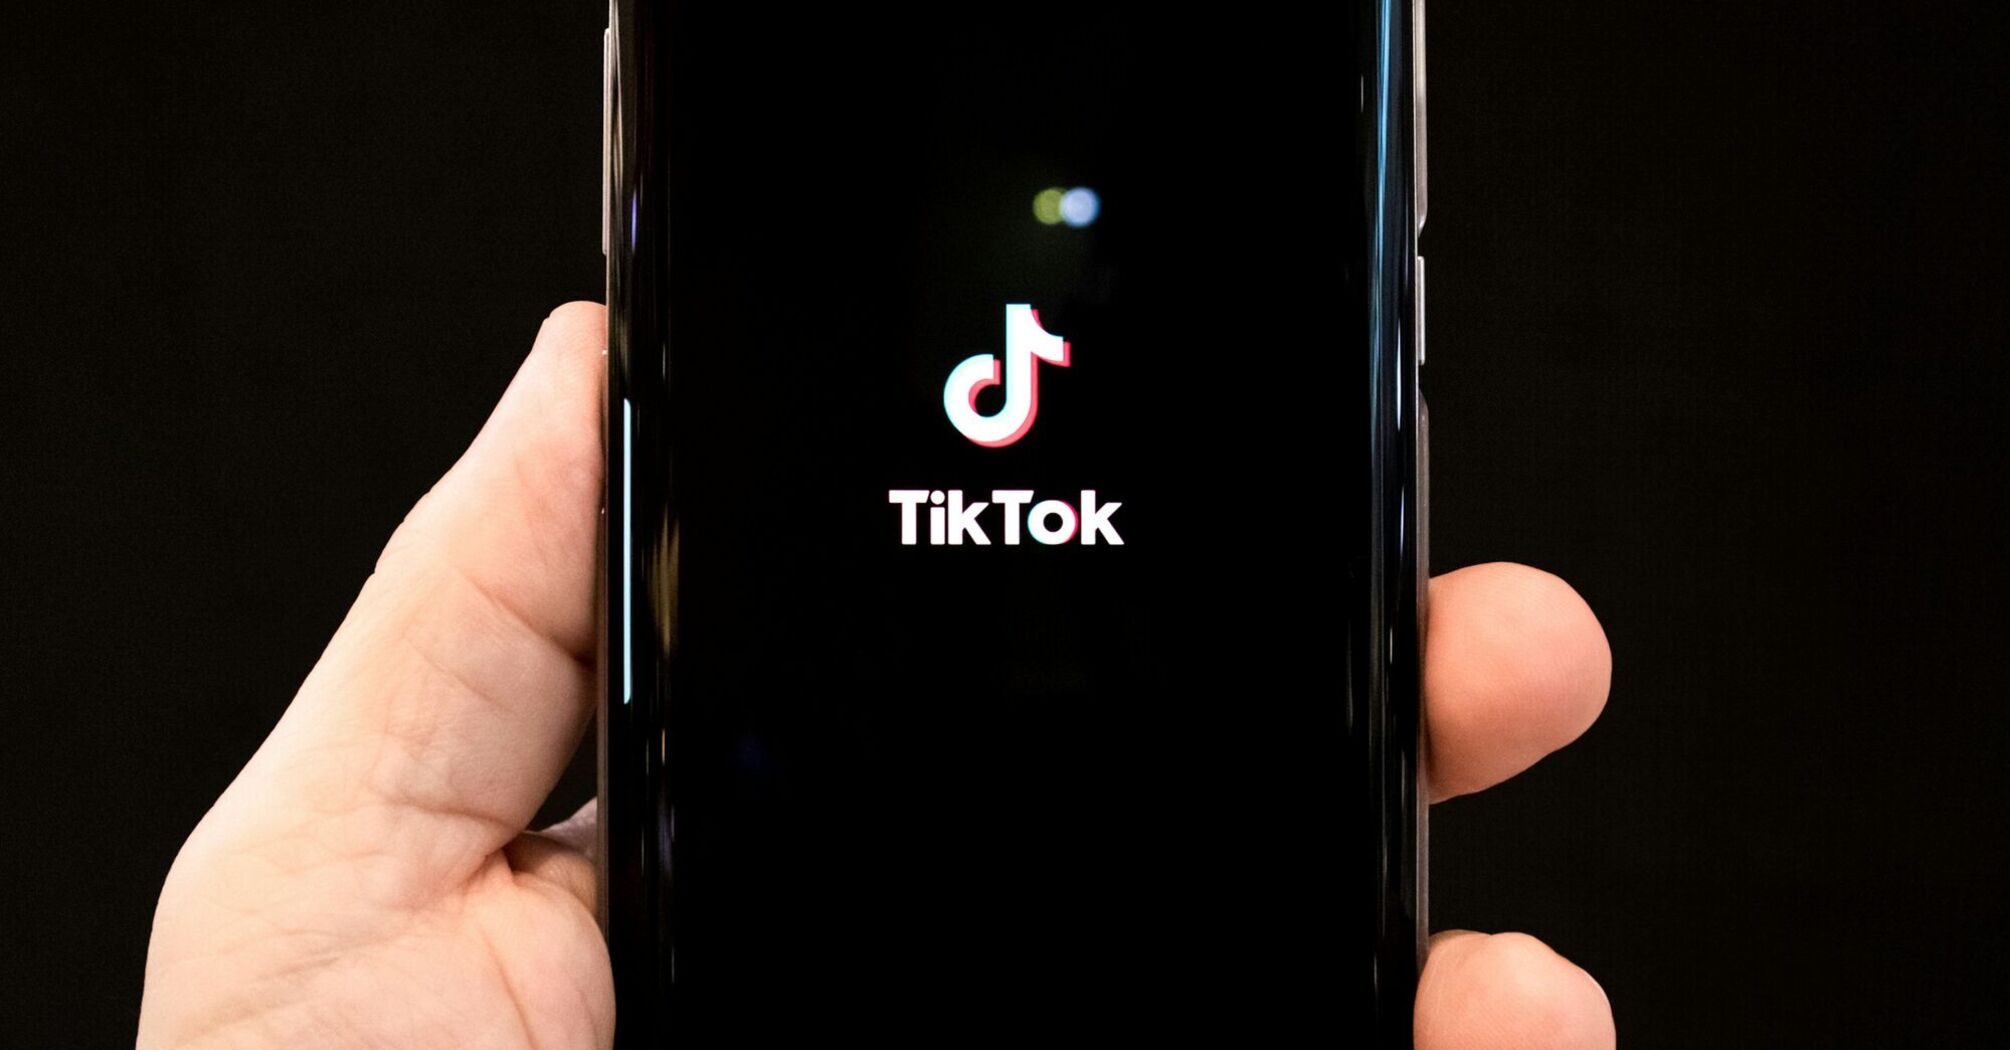 TikTok app on smartphone screen